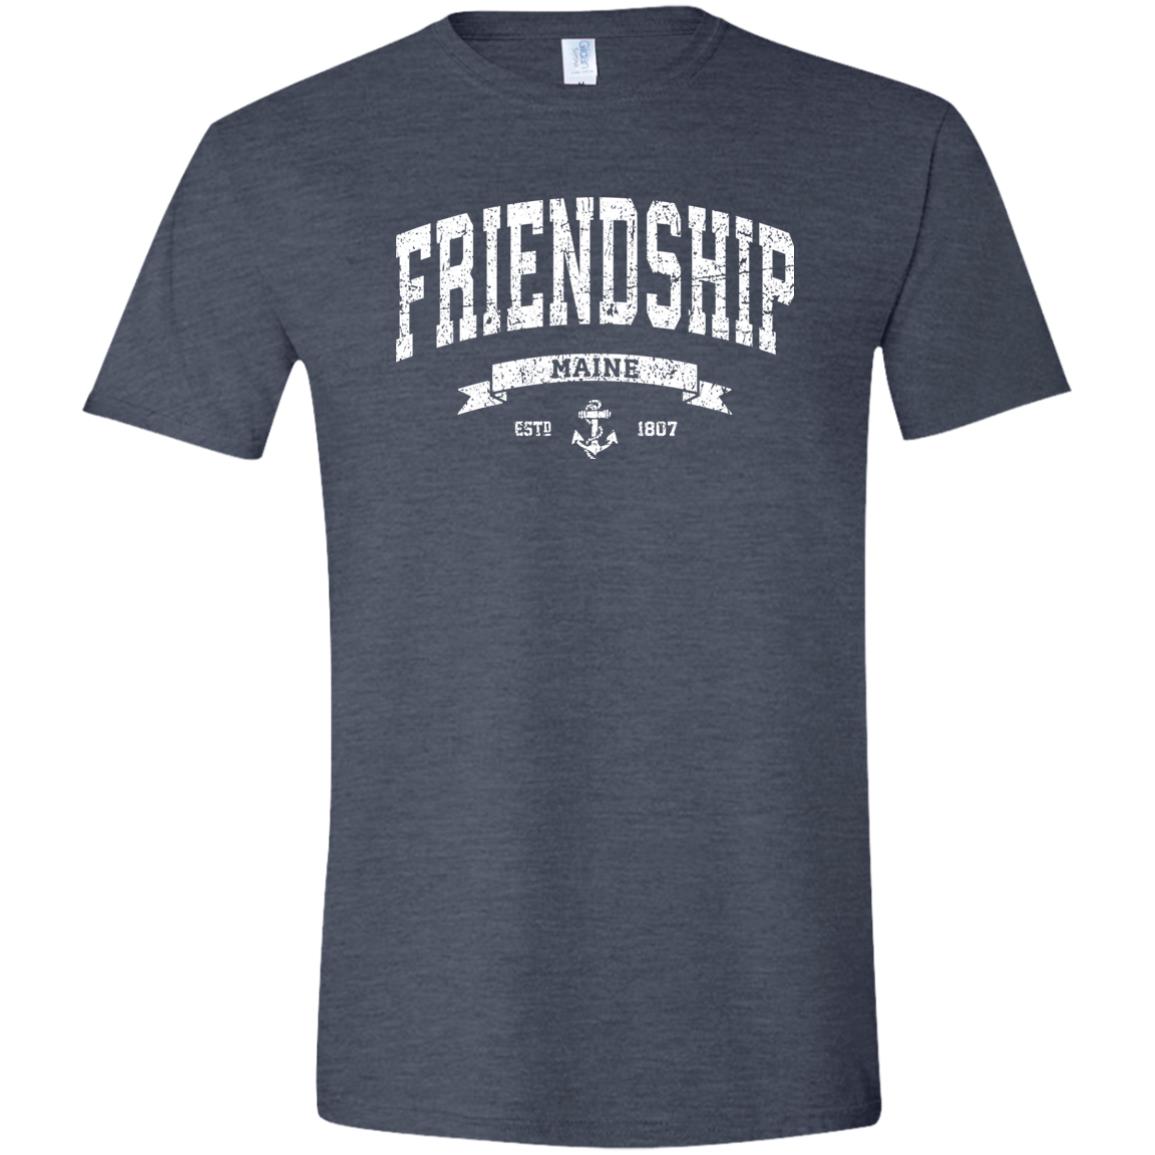 Distressed Vintage Friendship Maine Shirt - Nautical Anchor, Banner & Established Date - Comfy Soft T-Shirt (Unisex Tee) - 207 Threads